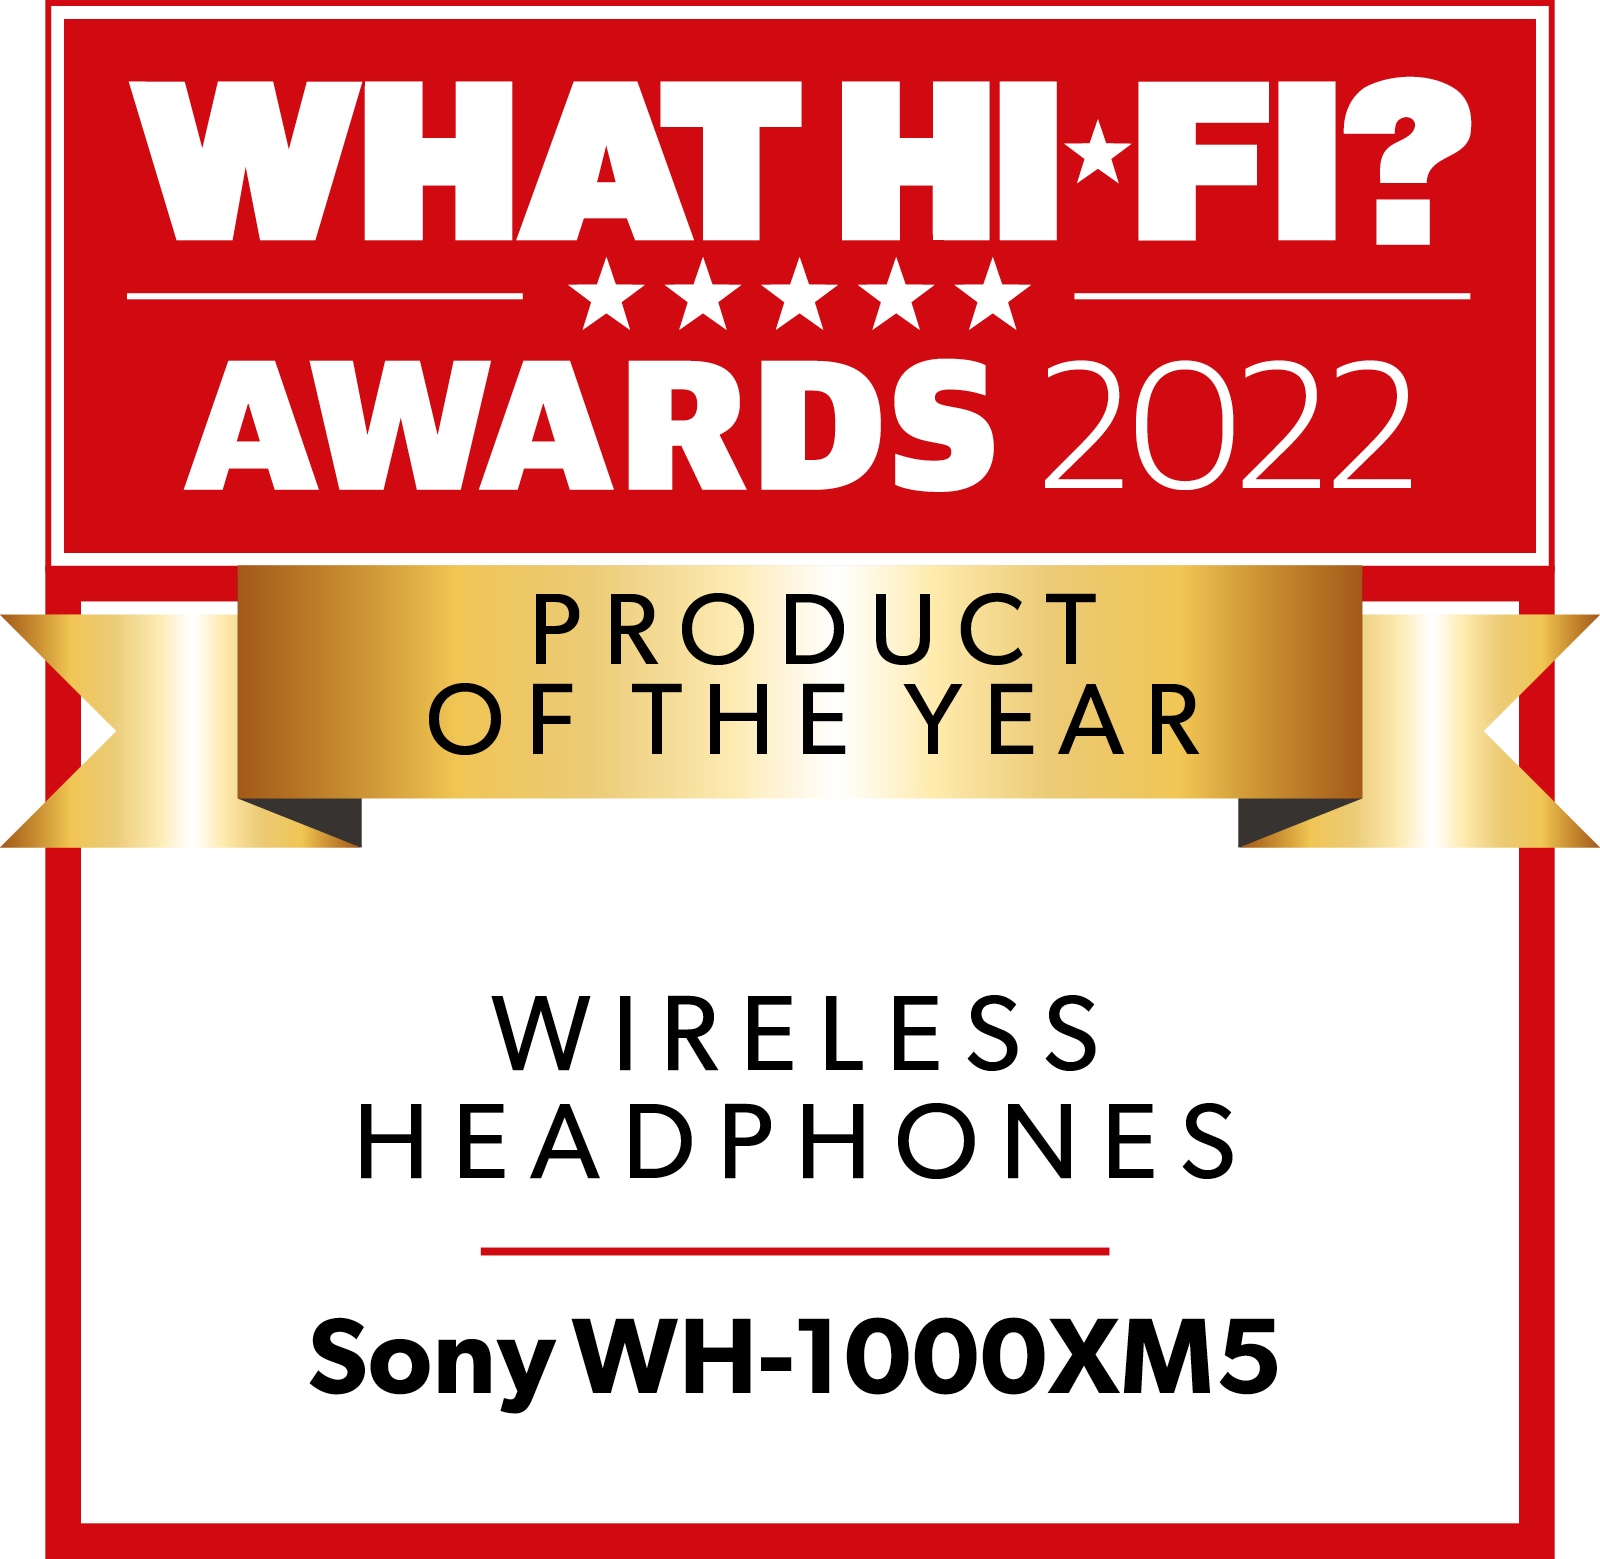 "What Hi-Fi? Awards 2022 winner. New design, same result for Sony’s latest premium noise-cancelling headphones."